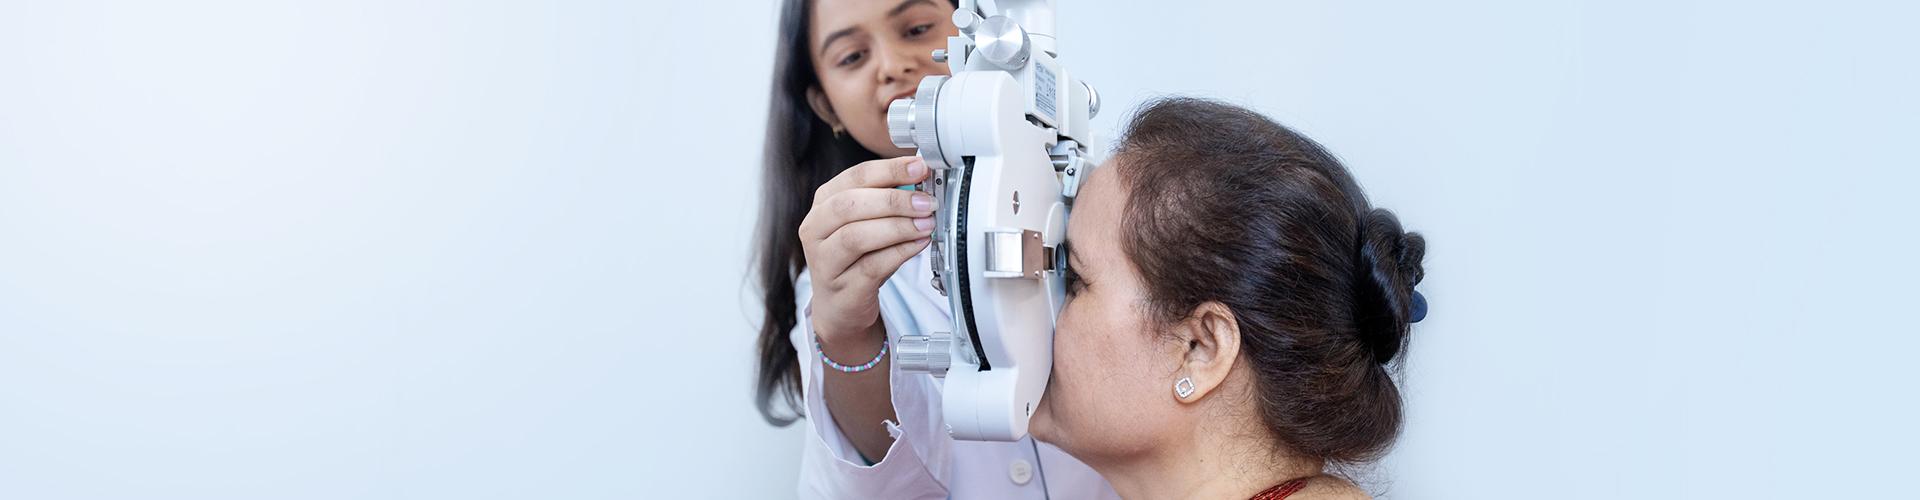 Person during eye examination